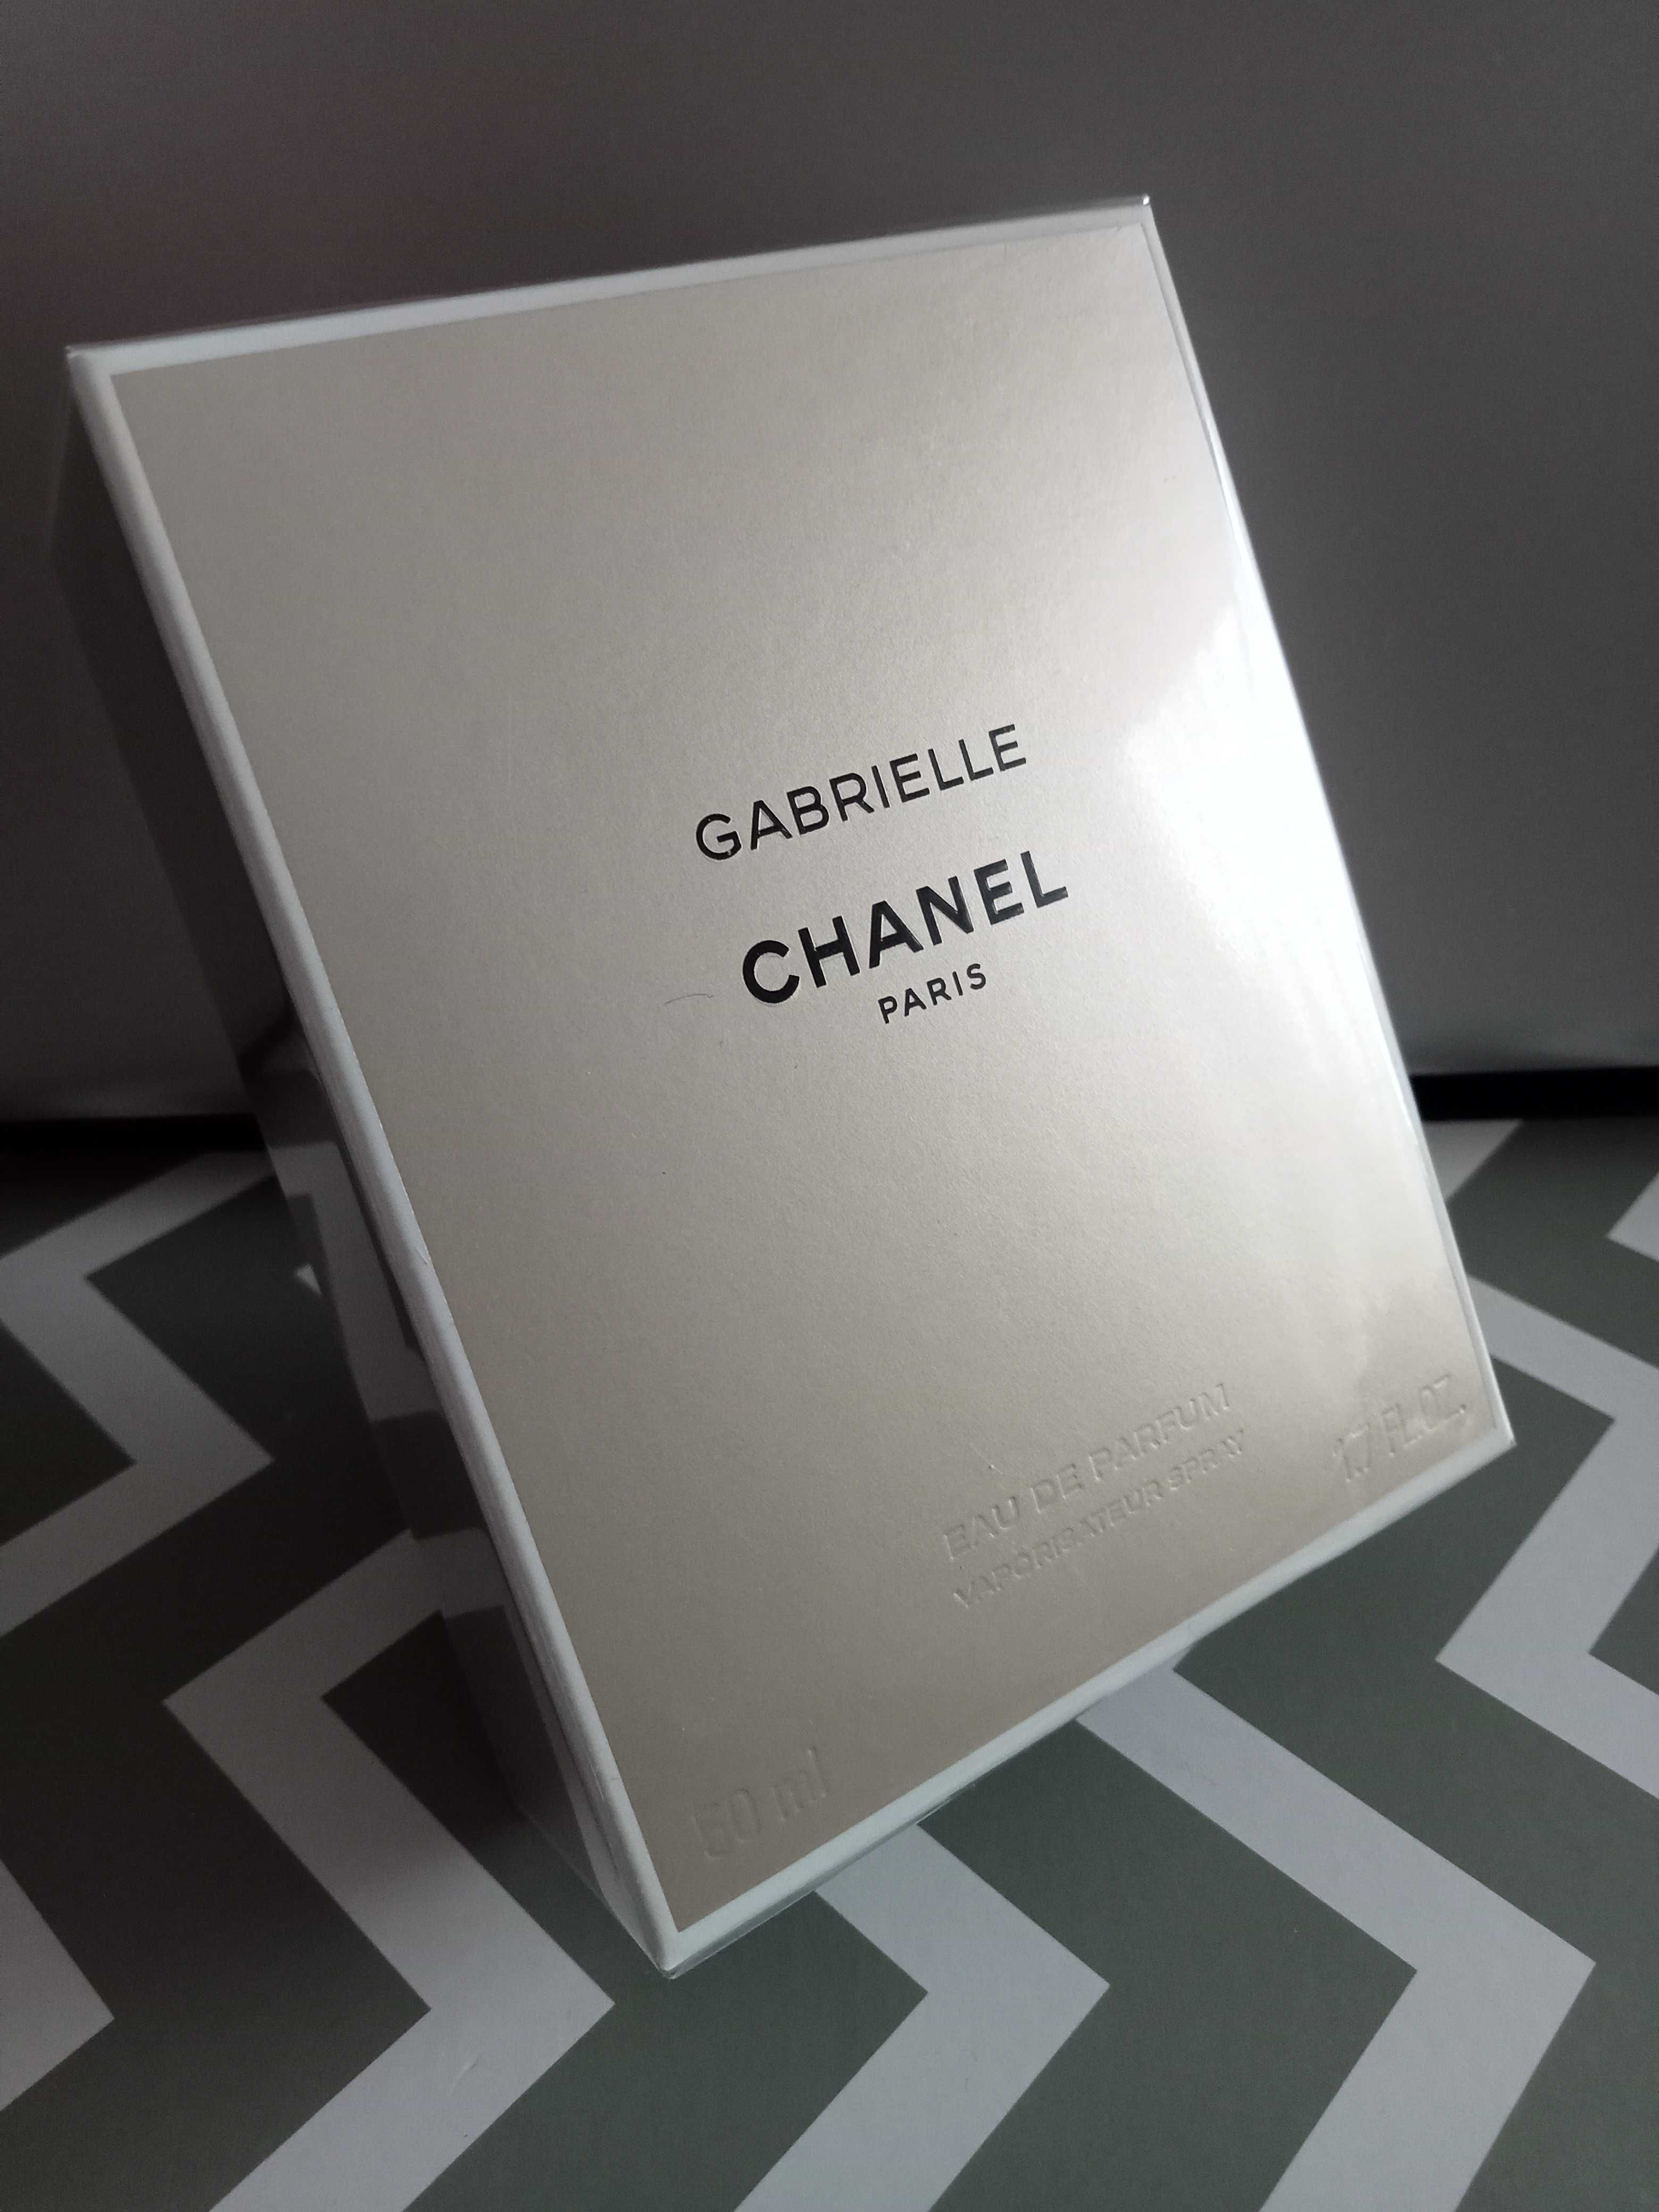 Chanel Gabrielle woda perfumowana 50ml